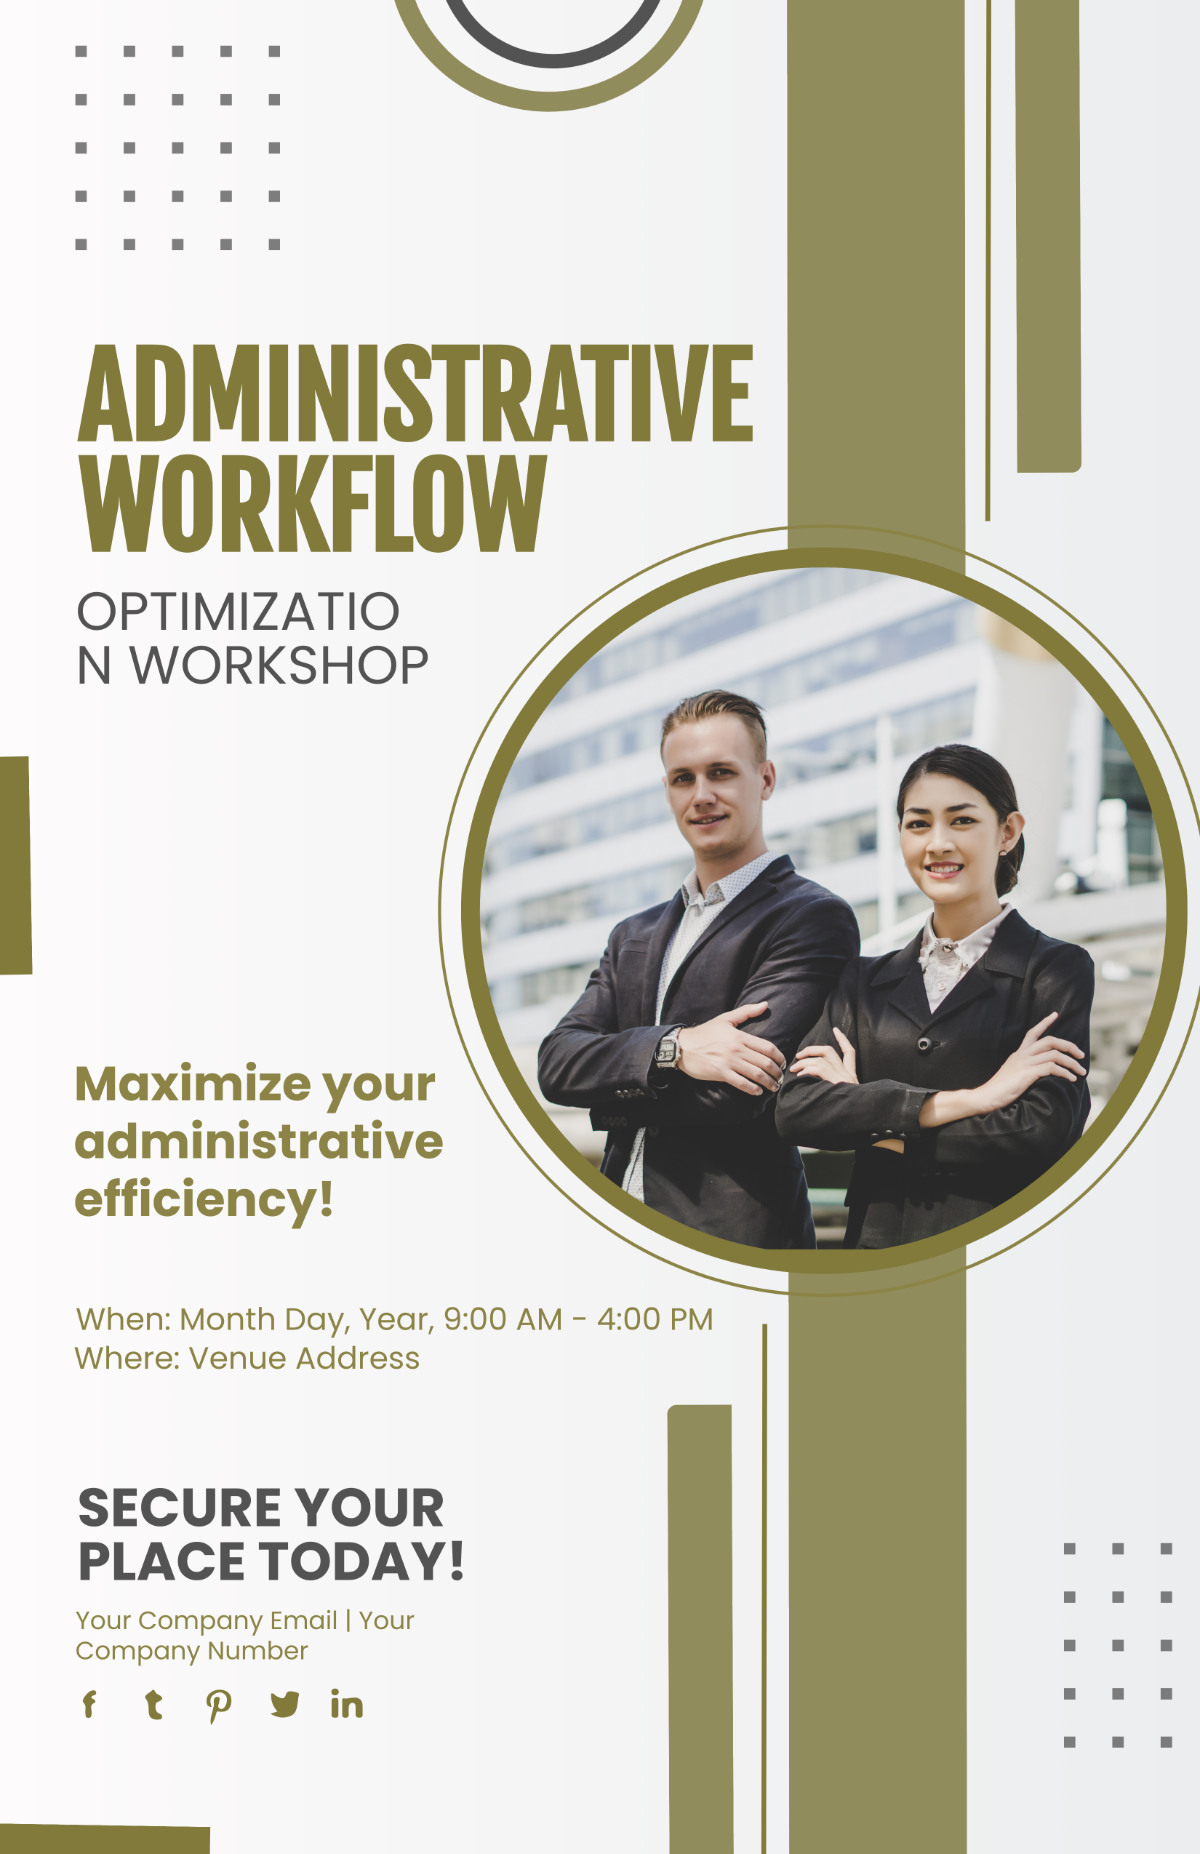 Administrative Workflow Optimization Workshop Poster Template